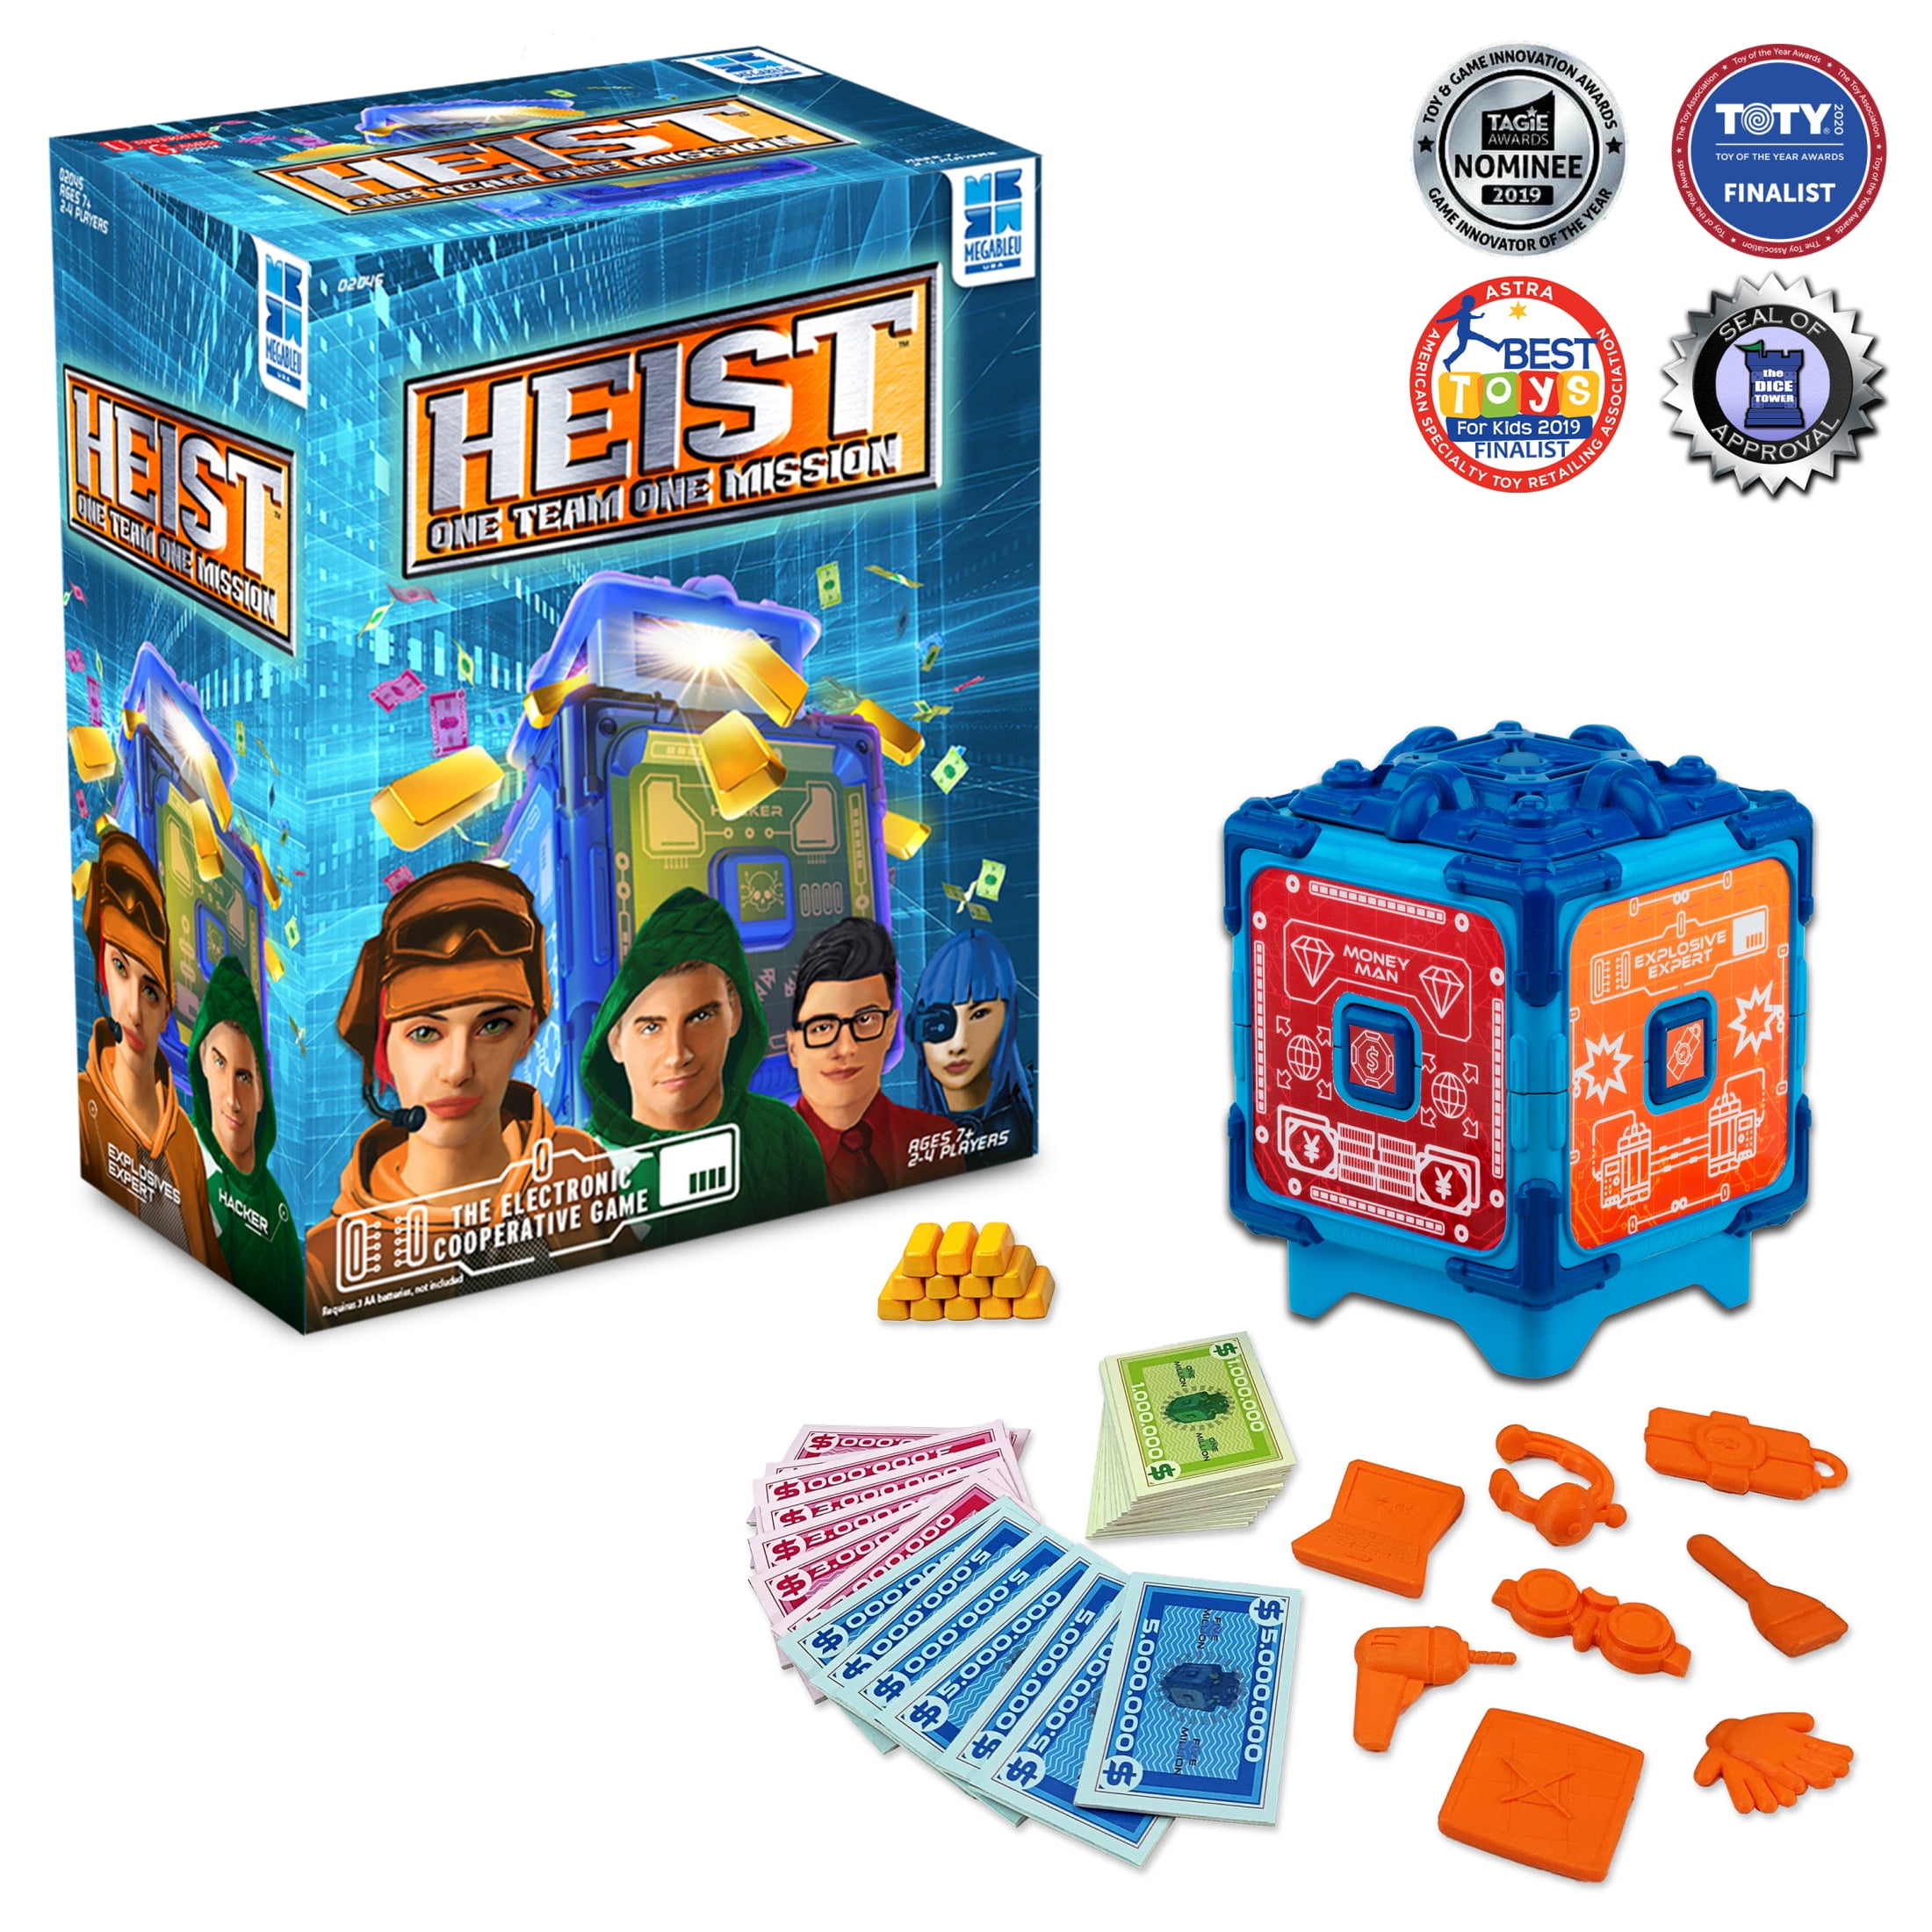 Heist Game One Team One Mission Game Megableu NEW SEALED